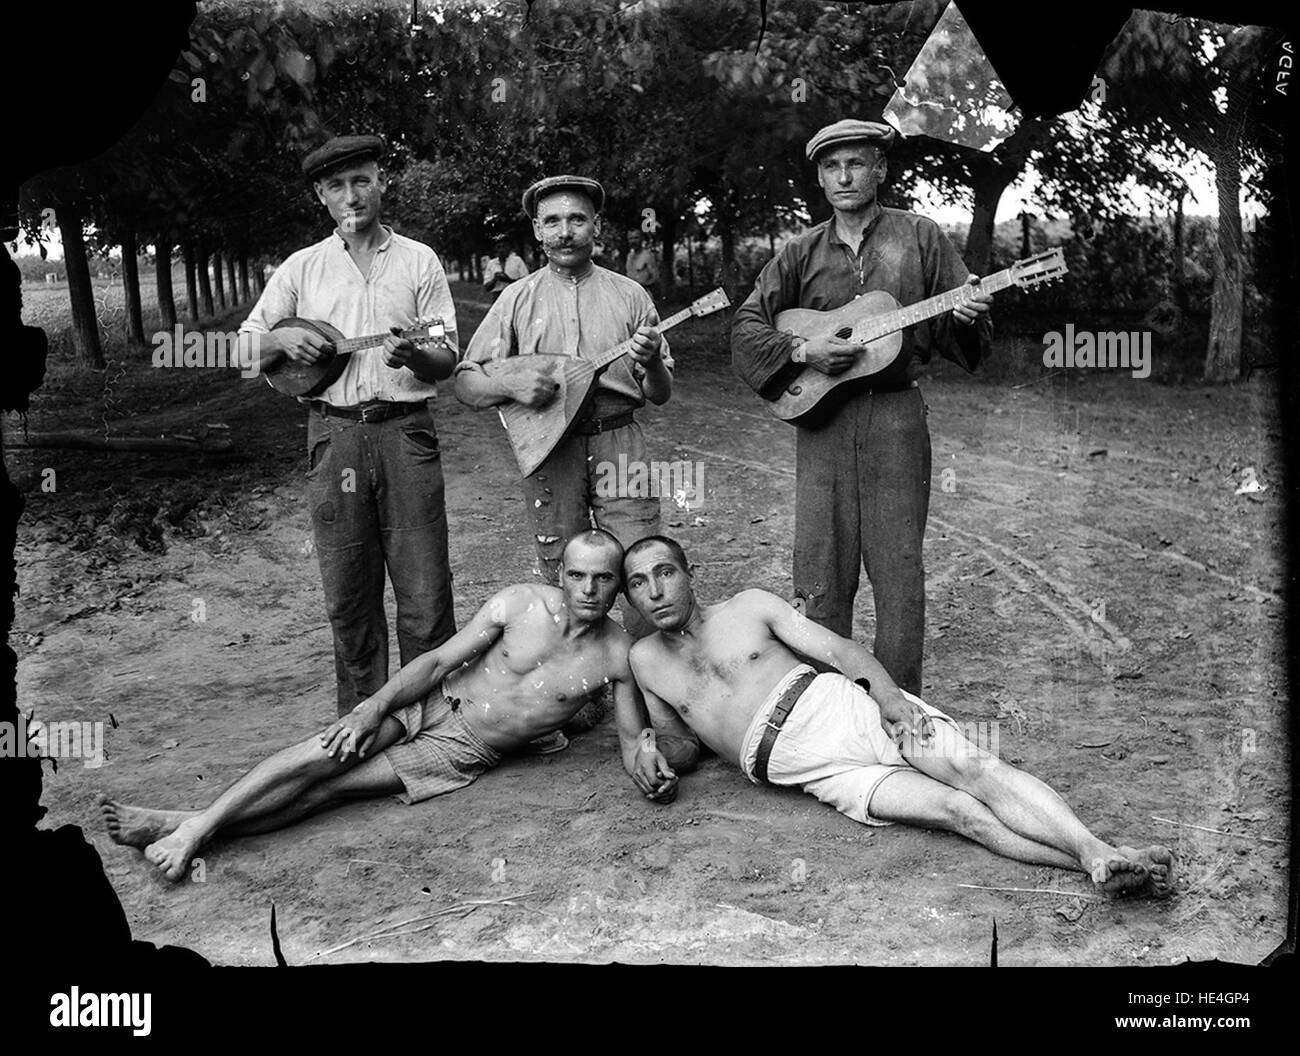 Grup cu instrumente muzicale Stock Photo - Alamy